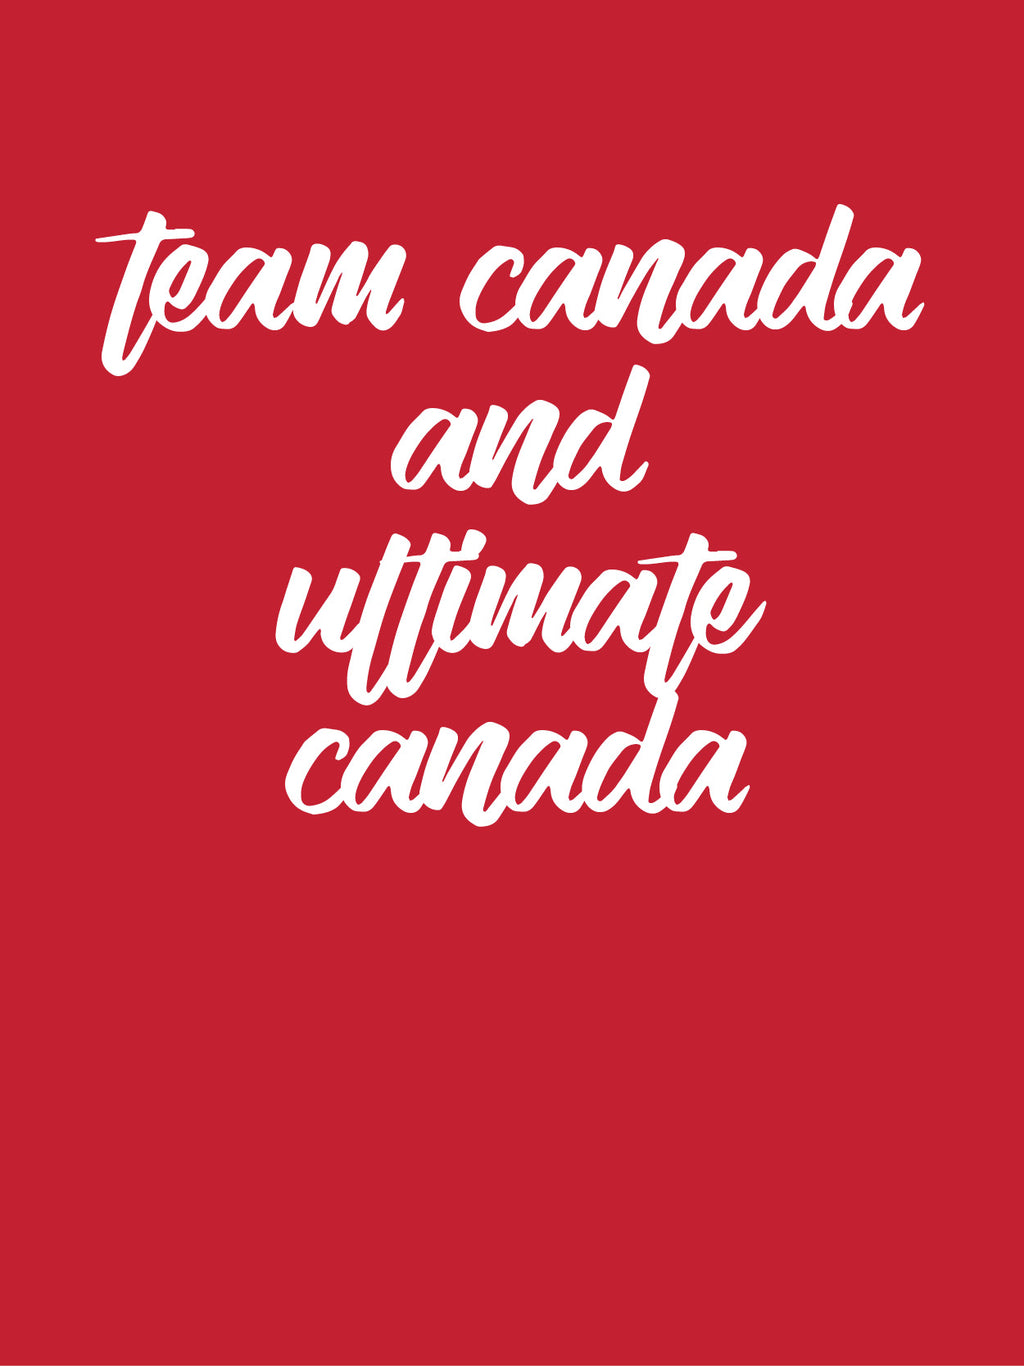 Ultimate Canada